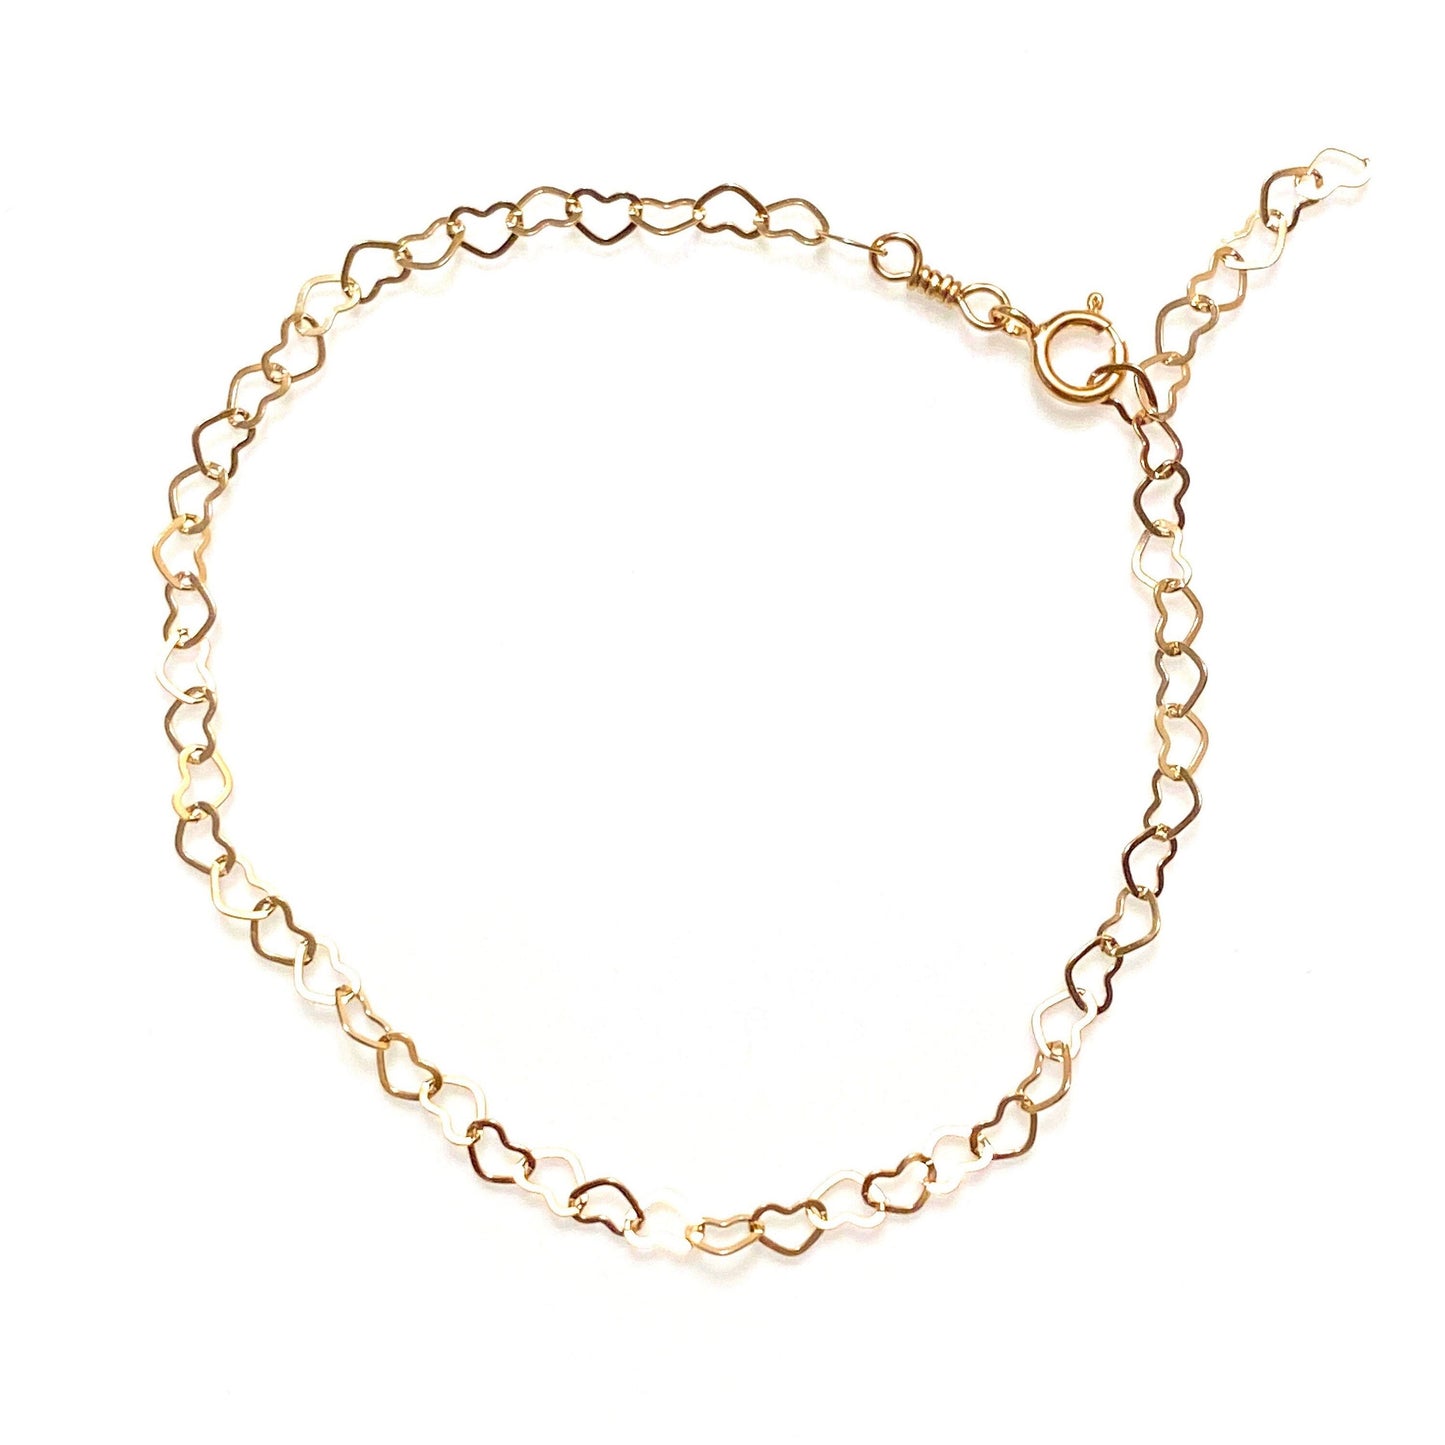 Dainty heart chain, bracelets, anklets (12K gold-filled, sterling silver)